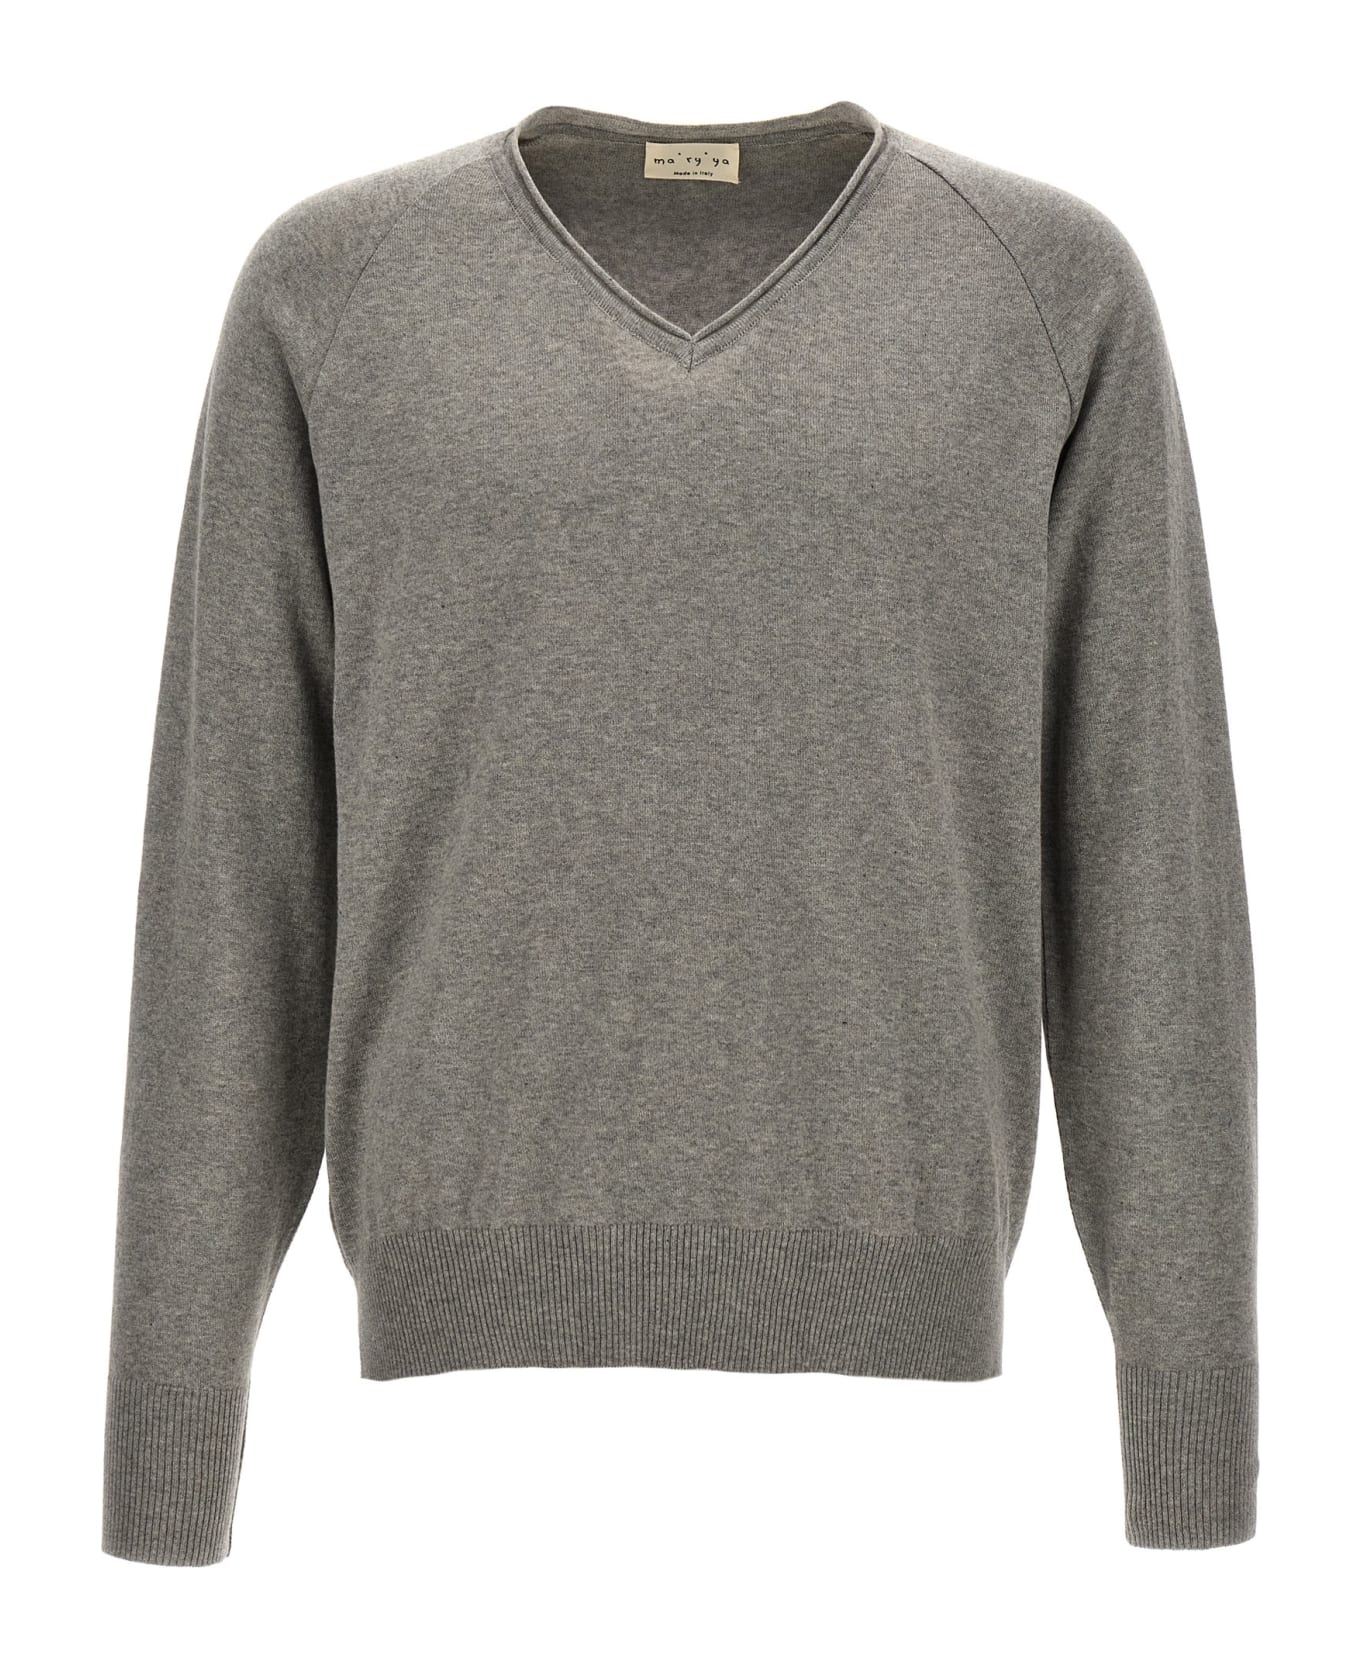 Ma'ry'ya V-neck Sweater - Gray ニットウェア